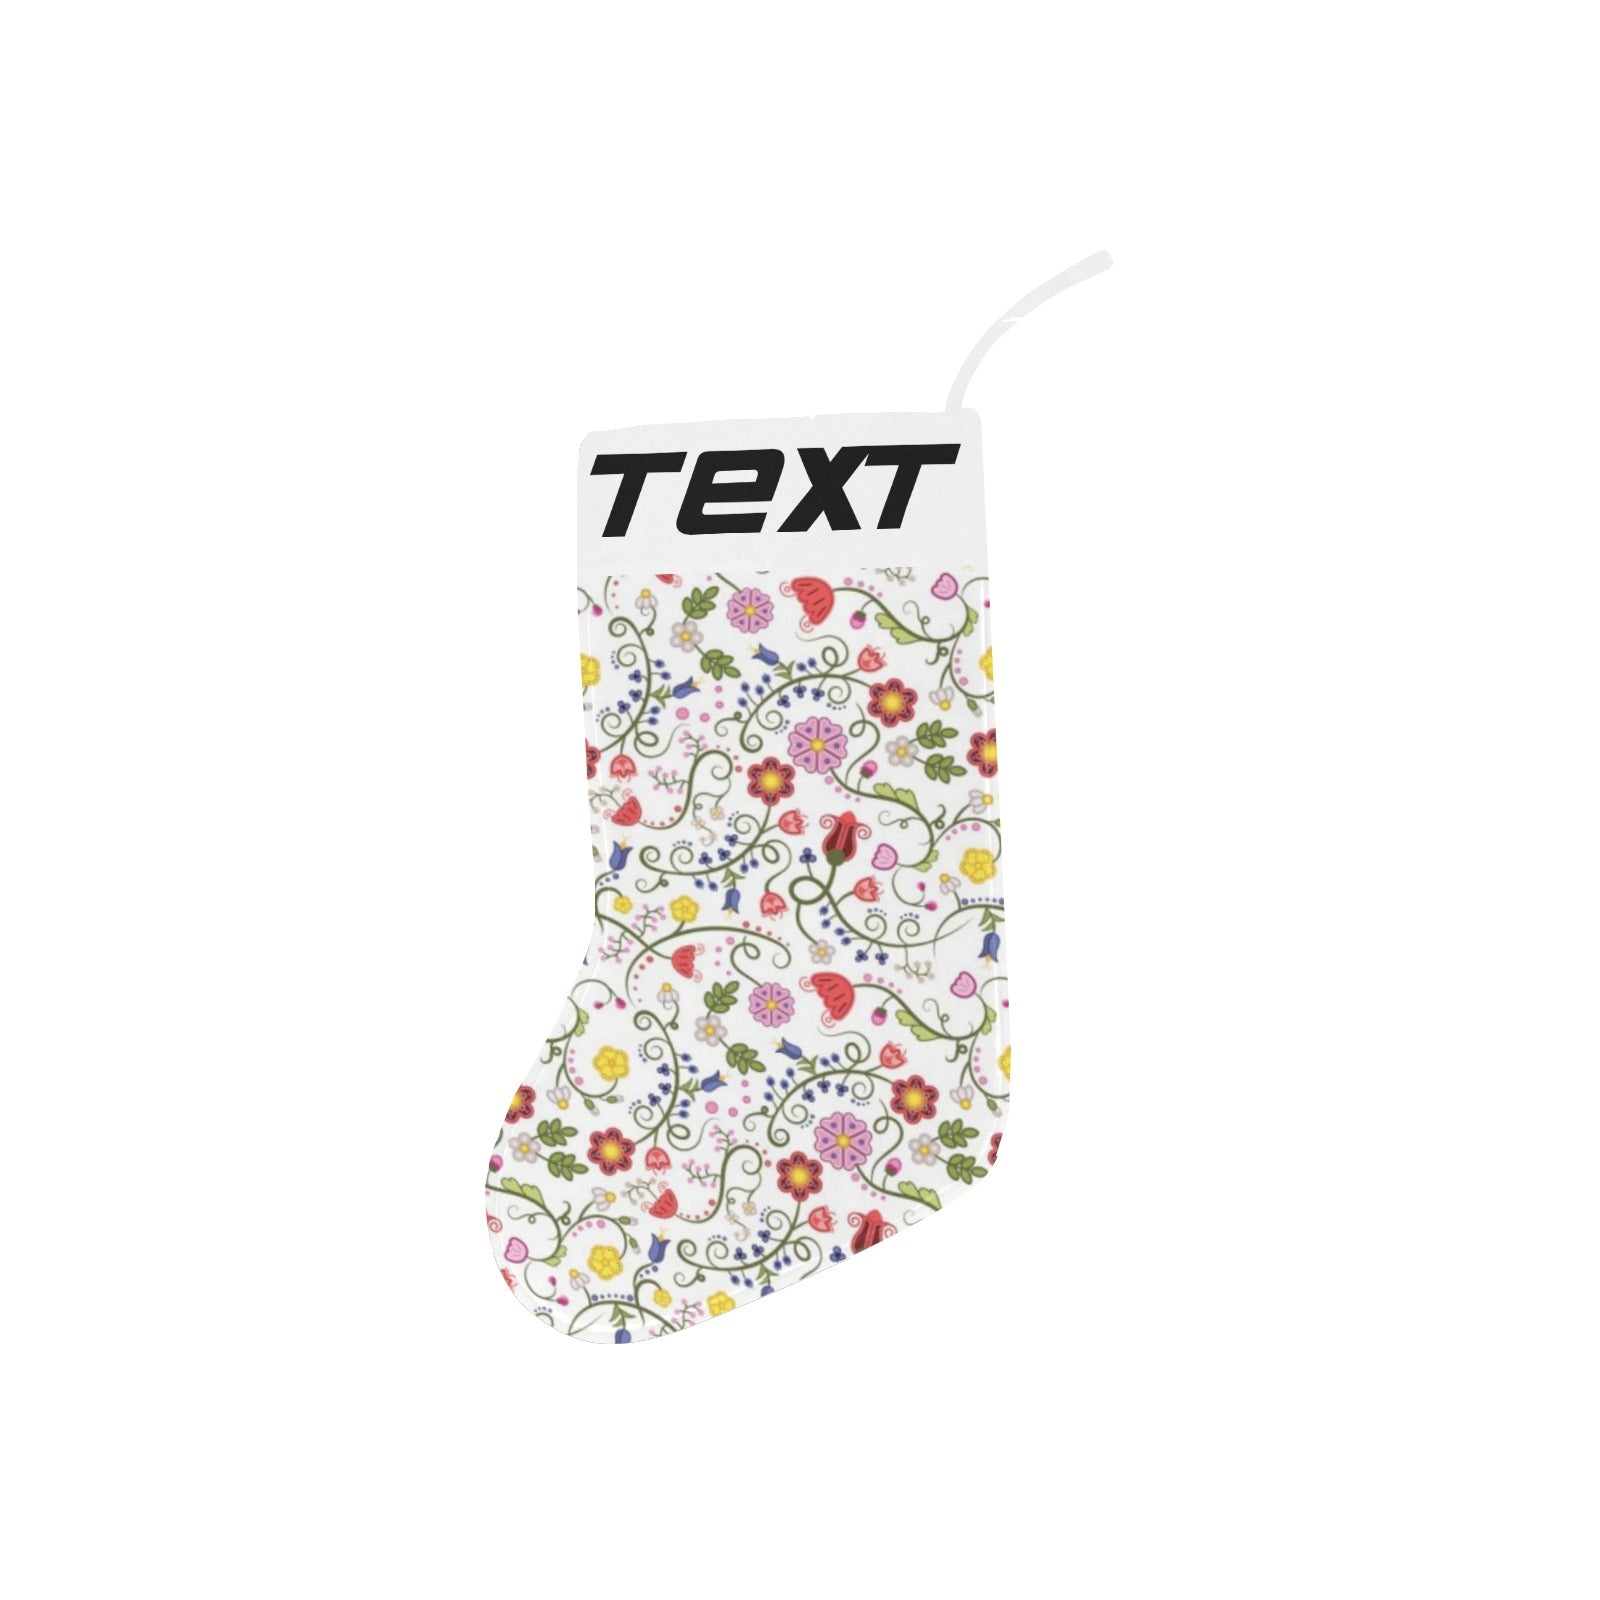 Nipin Blossom Christmas Stocking (Custom Text on The Top)